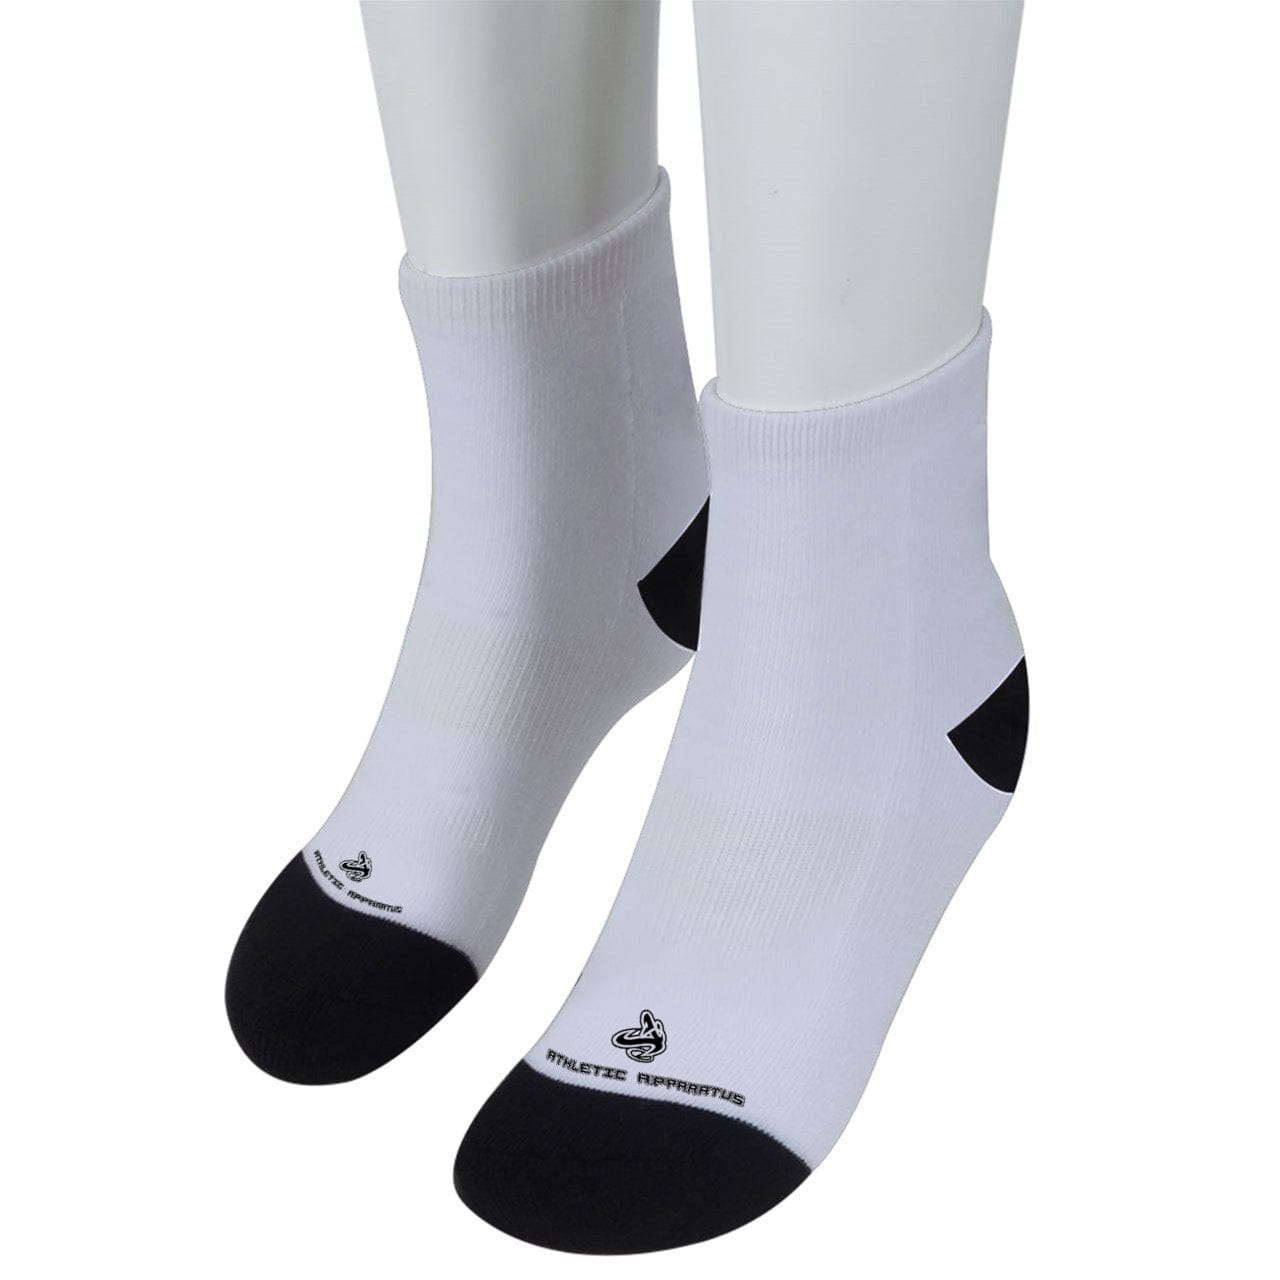 Athletic Apparatus socks 2 Men's Low Cut Socks - Athletic Apparatus